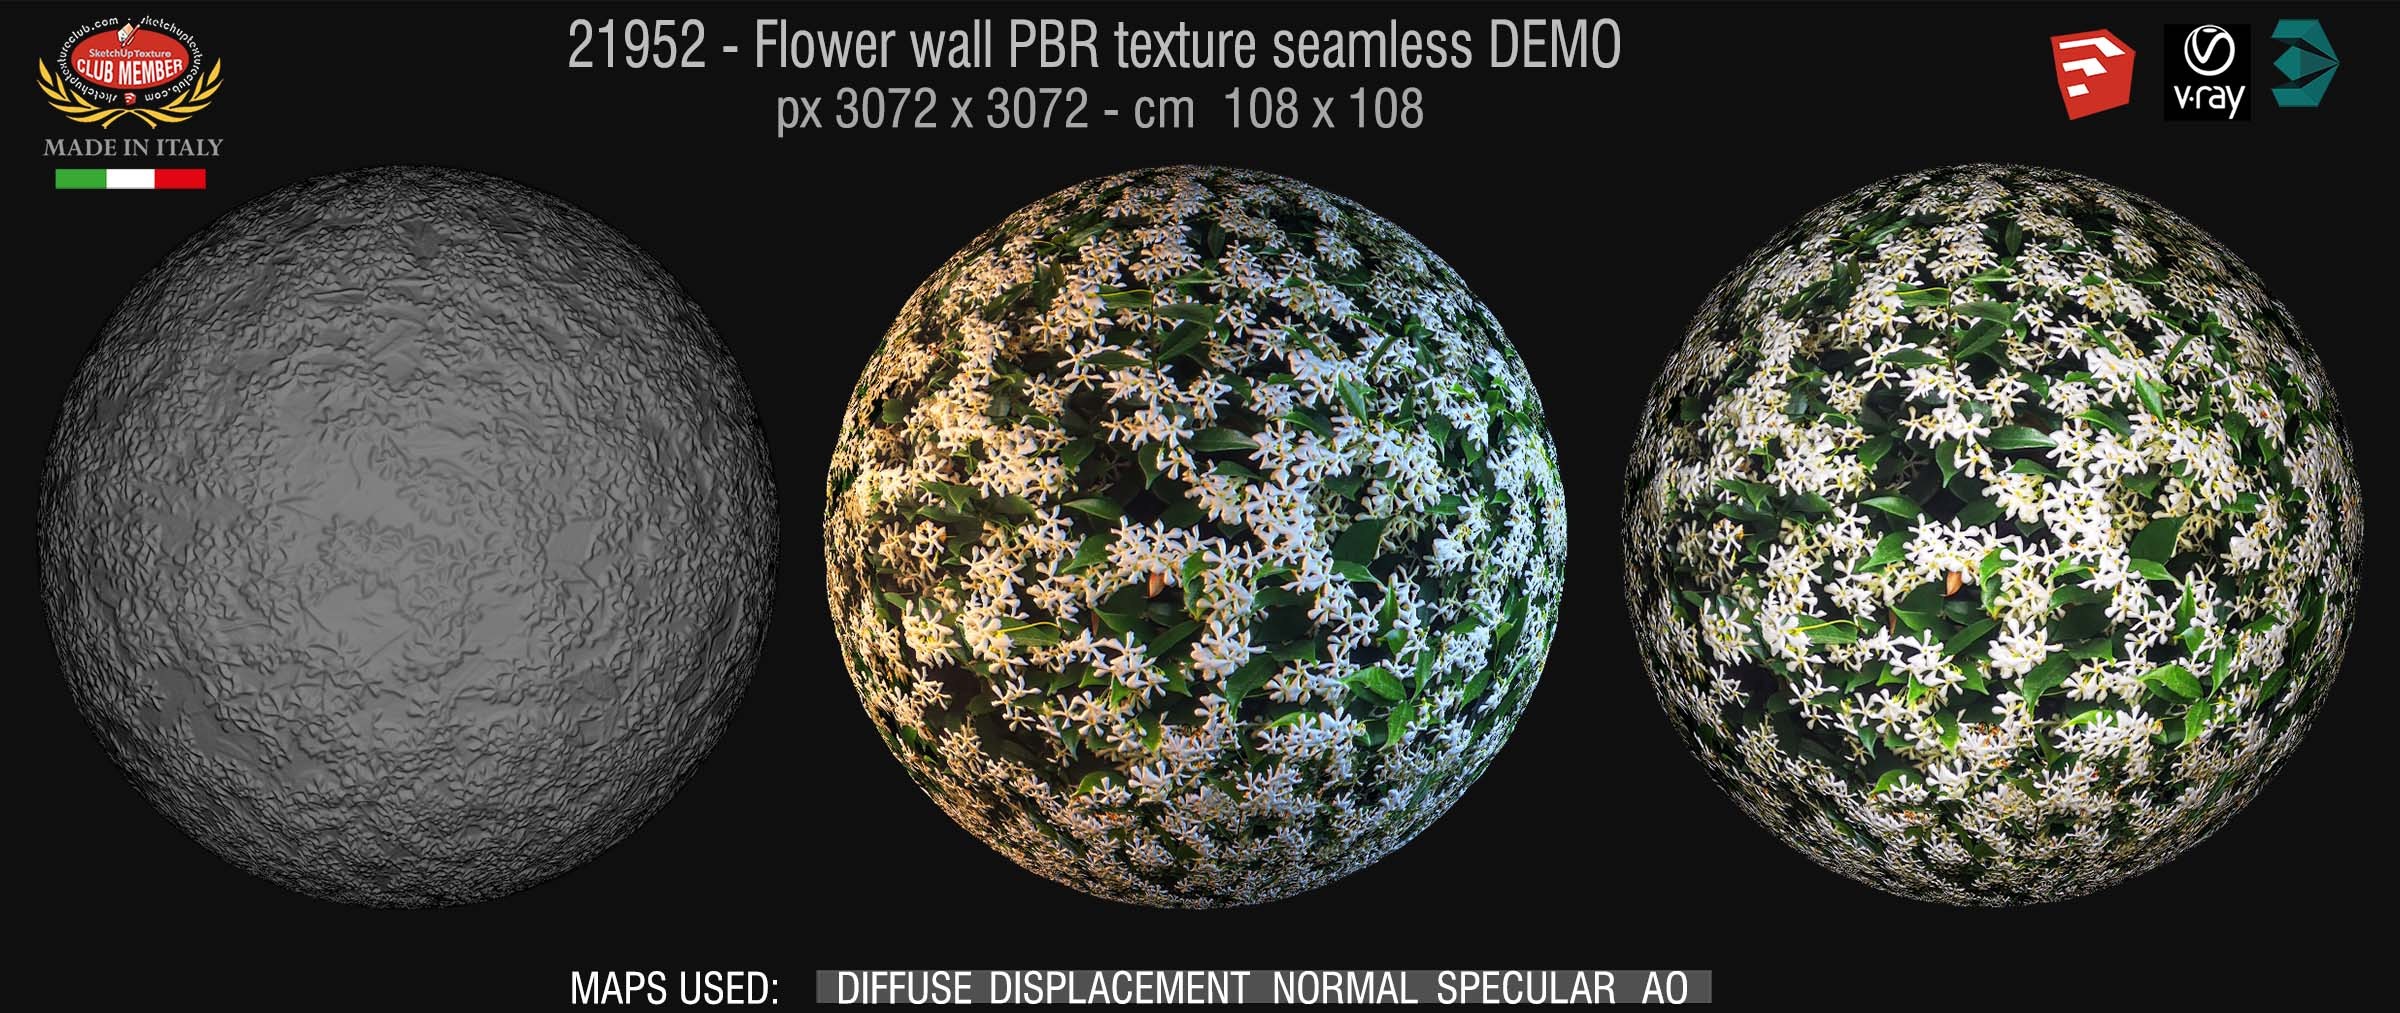 21952 lower wall PBR texture seamless DEMO